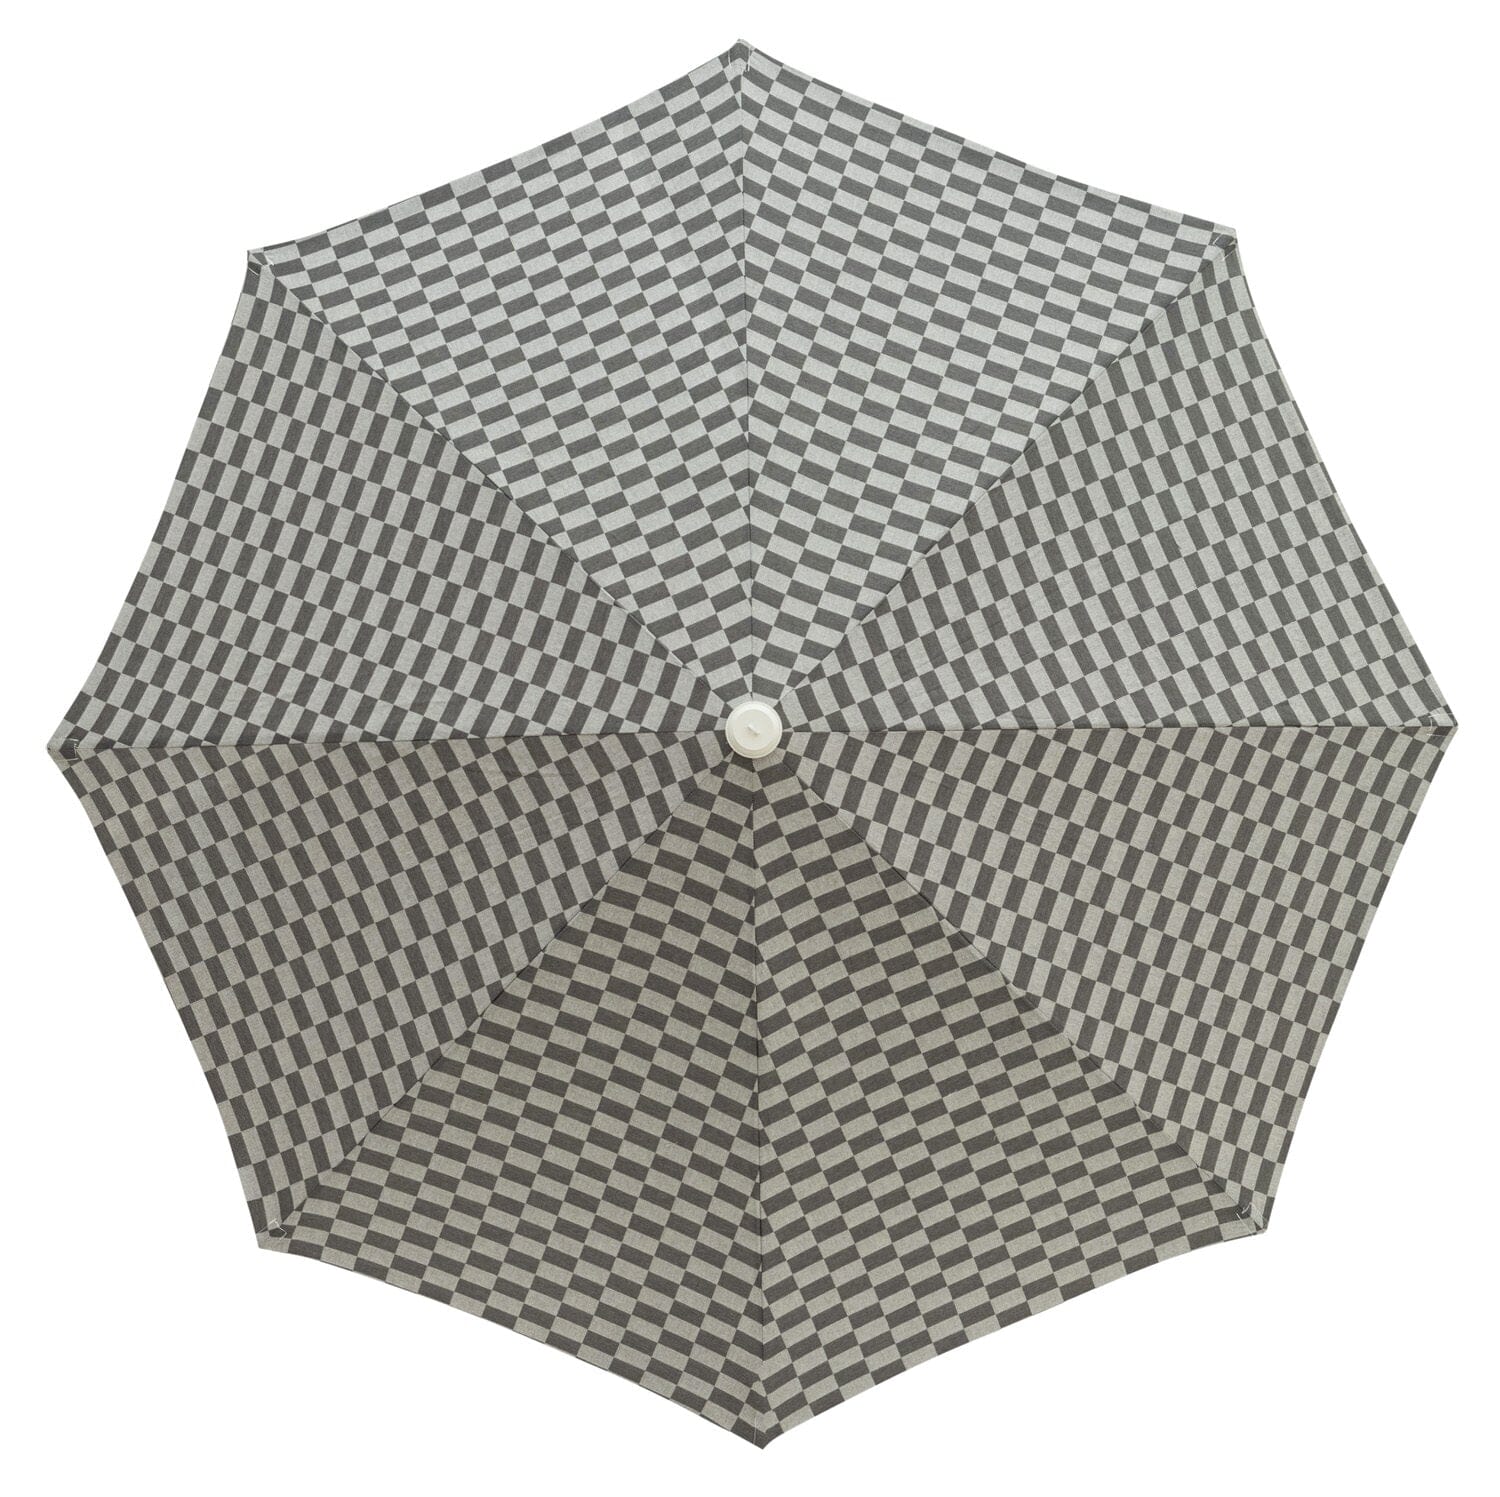 The Amalfi Umbrella - Vintage Green Check